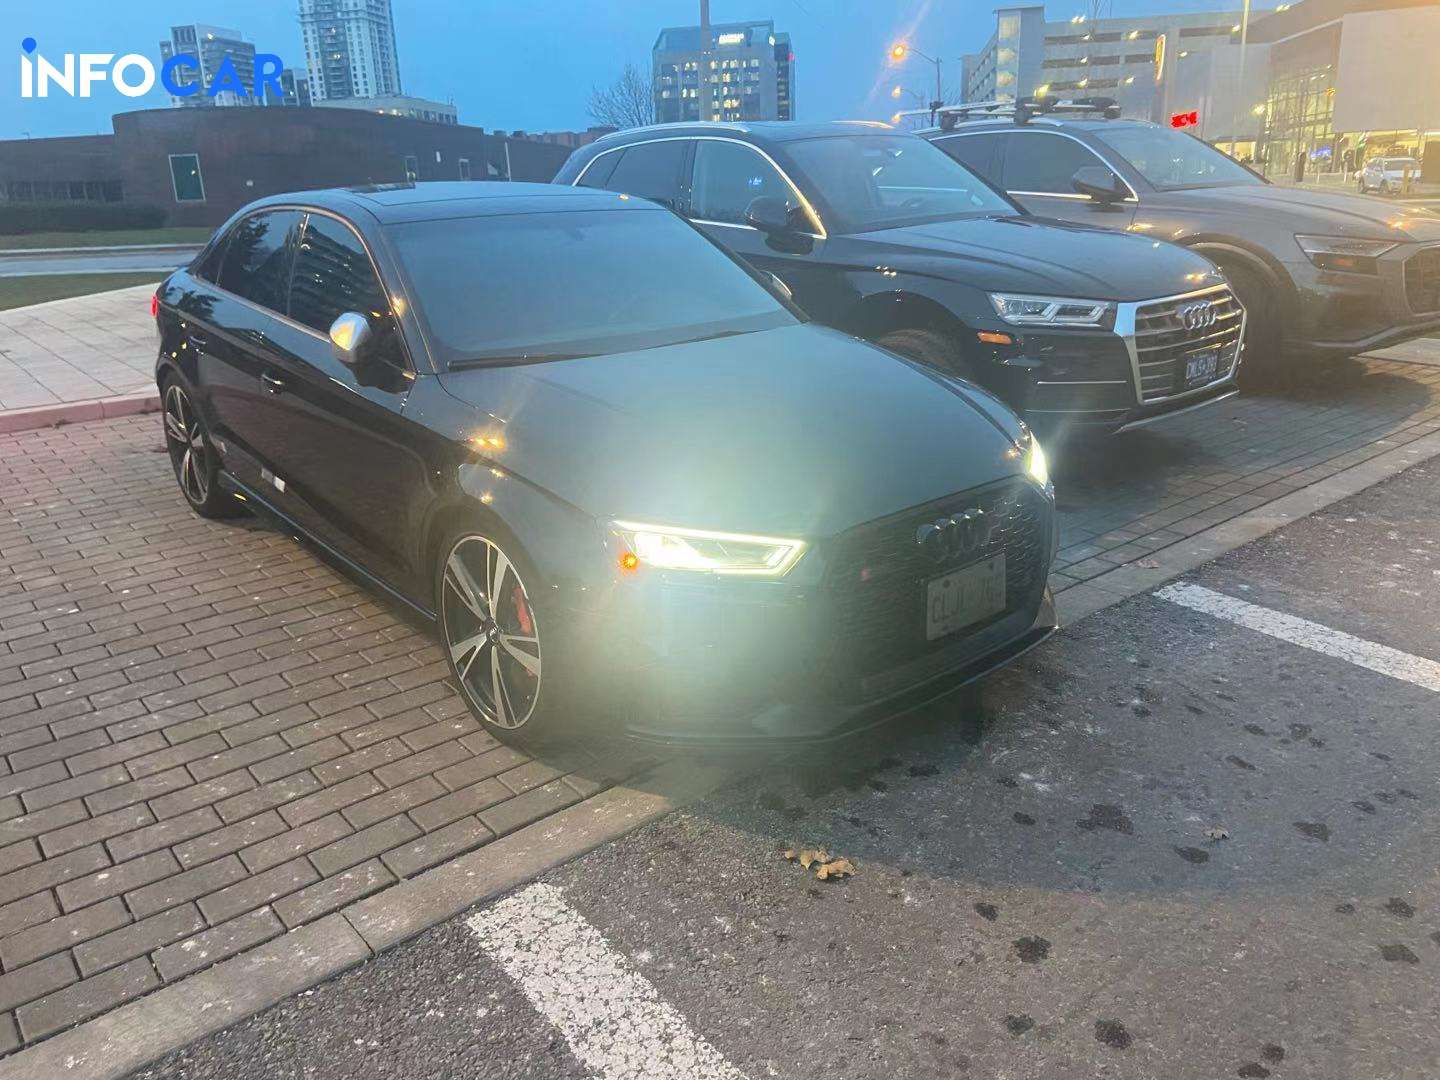 2018 Audi RS 3  - INFOCAR - Toronto Auto Trading Platform